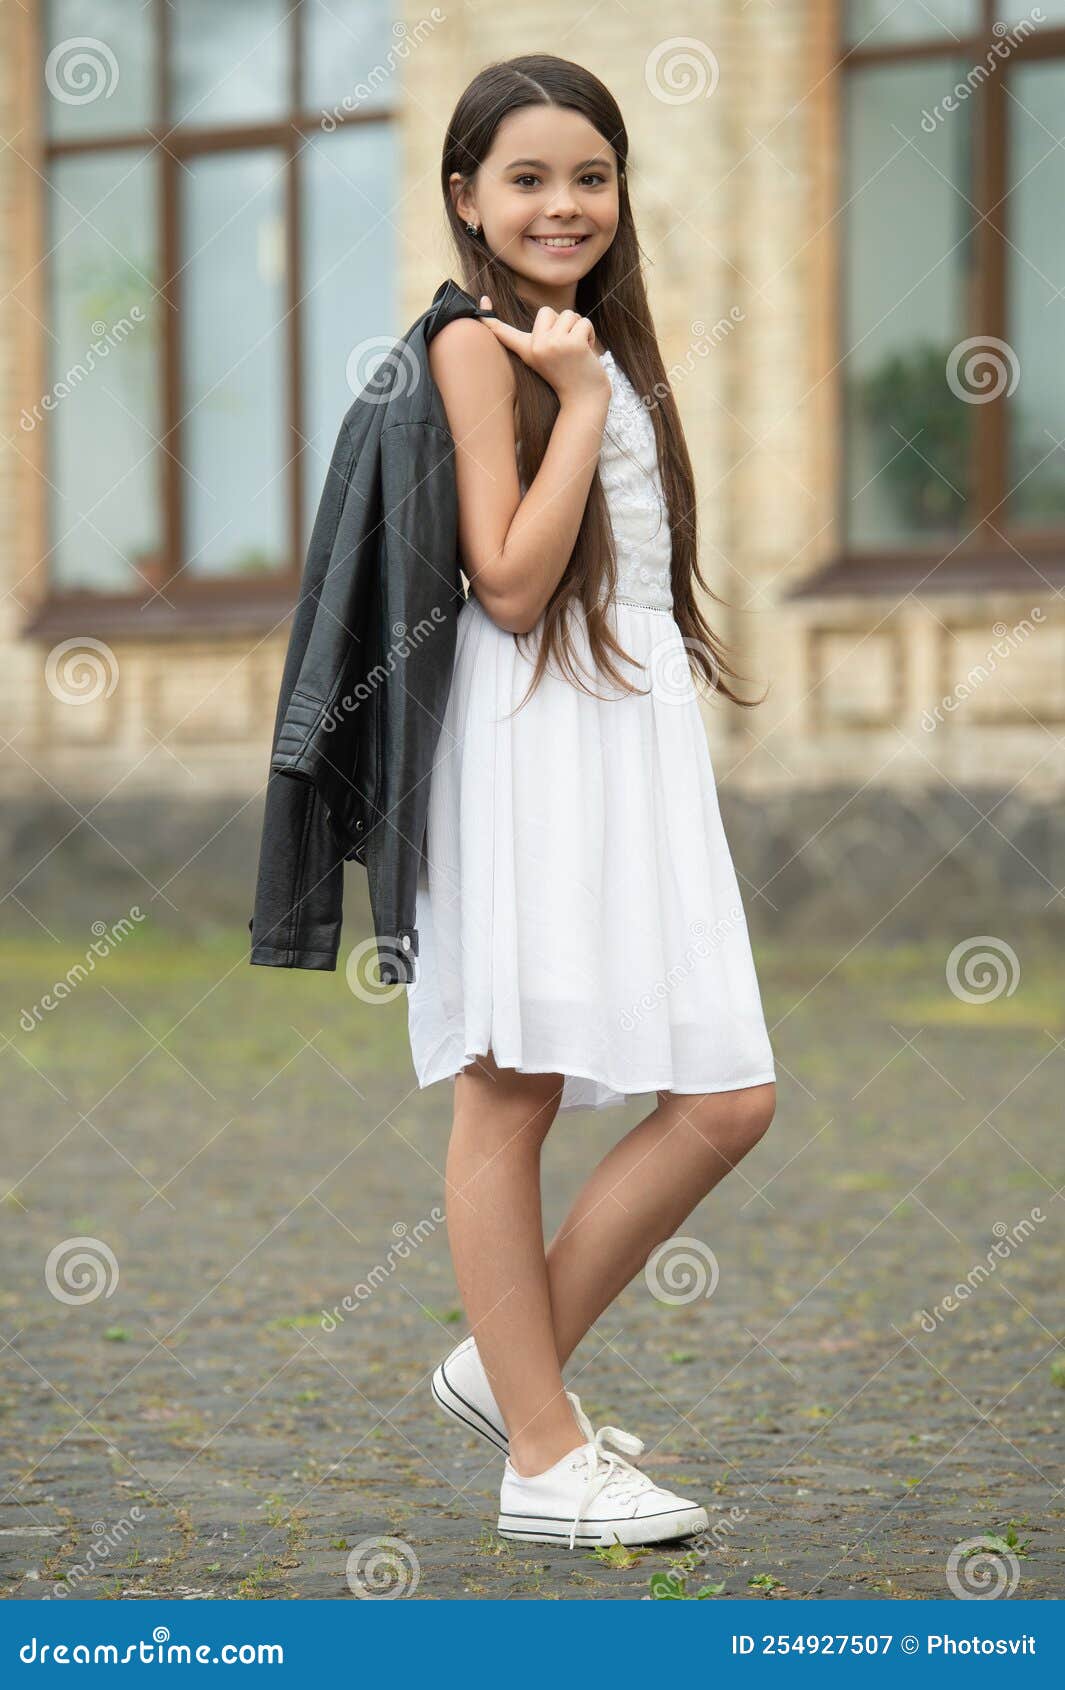 Cheerful Pretty Teen Girl. Adorable Girl Fashion Model Stock Image ...